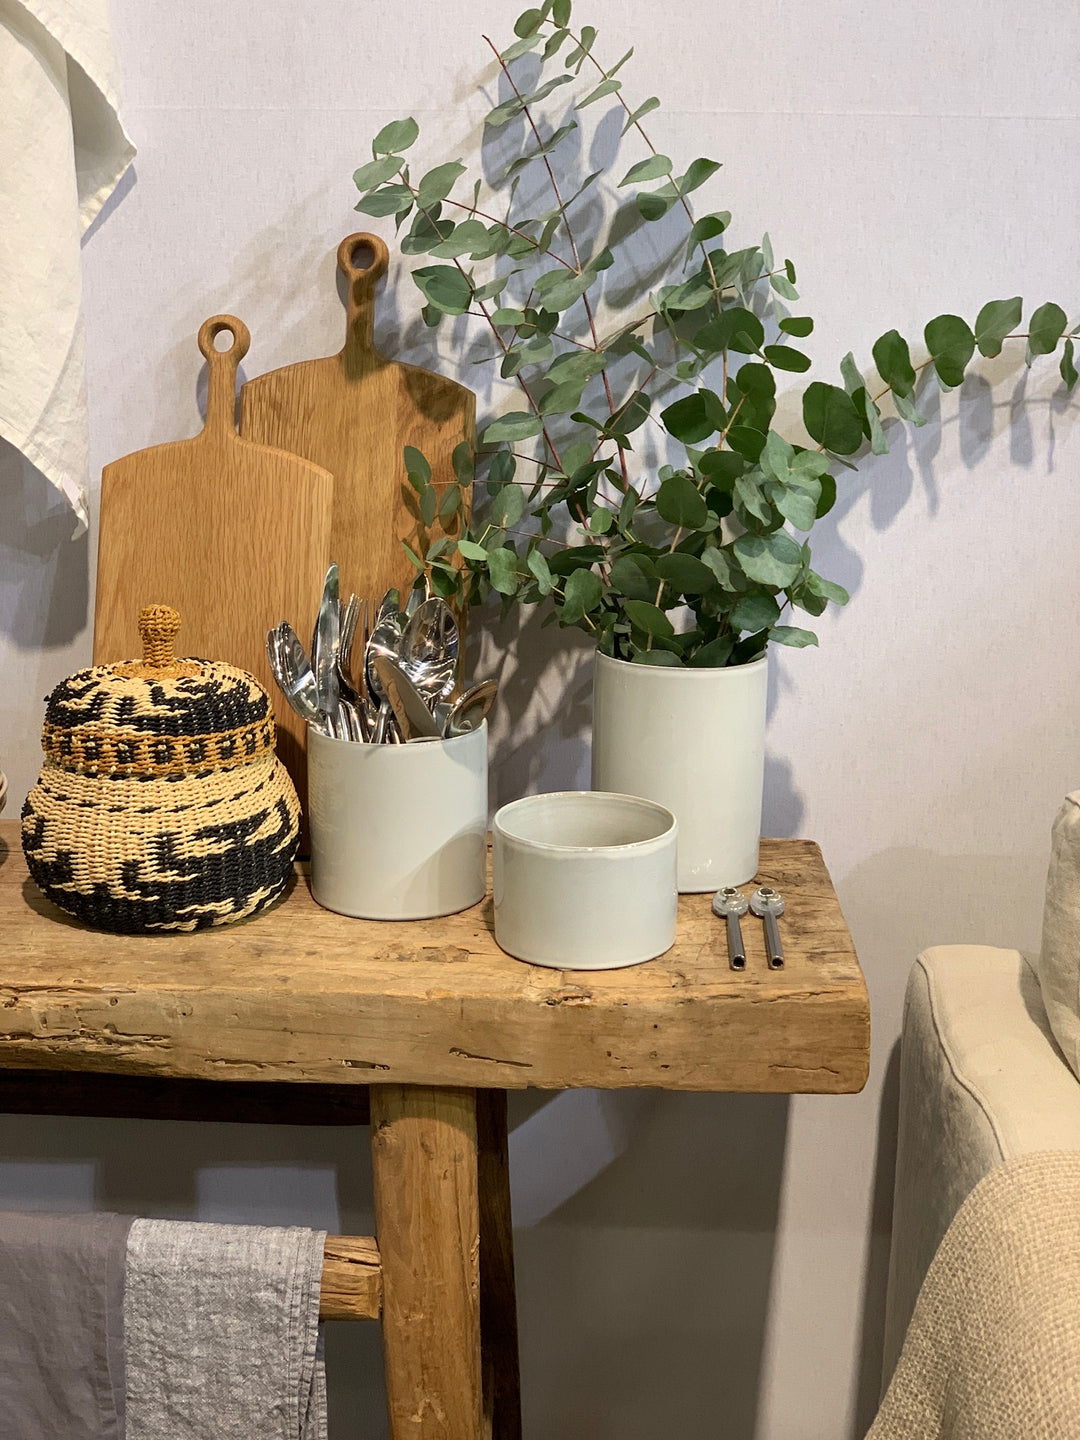 Home Barn's 2019 vintage interior trends